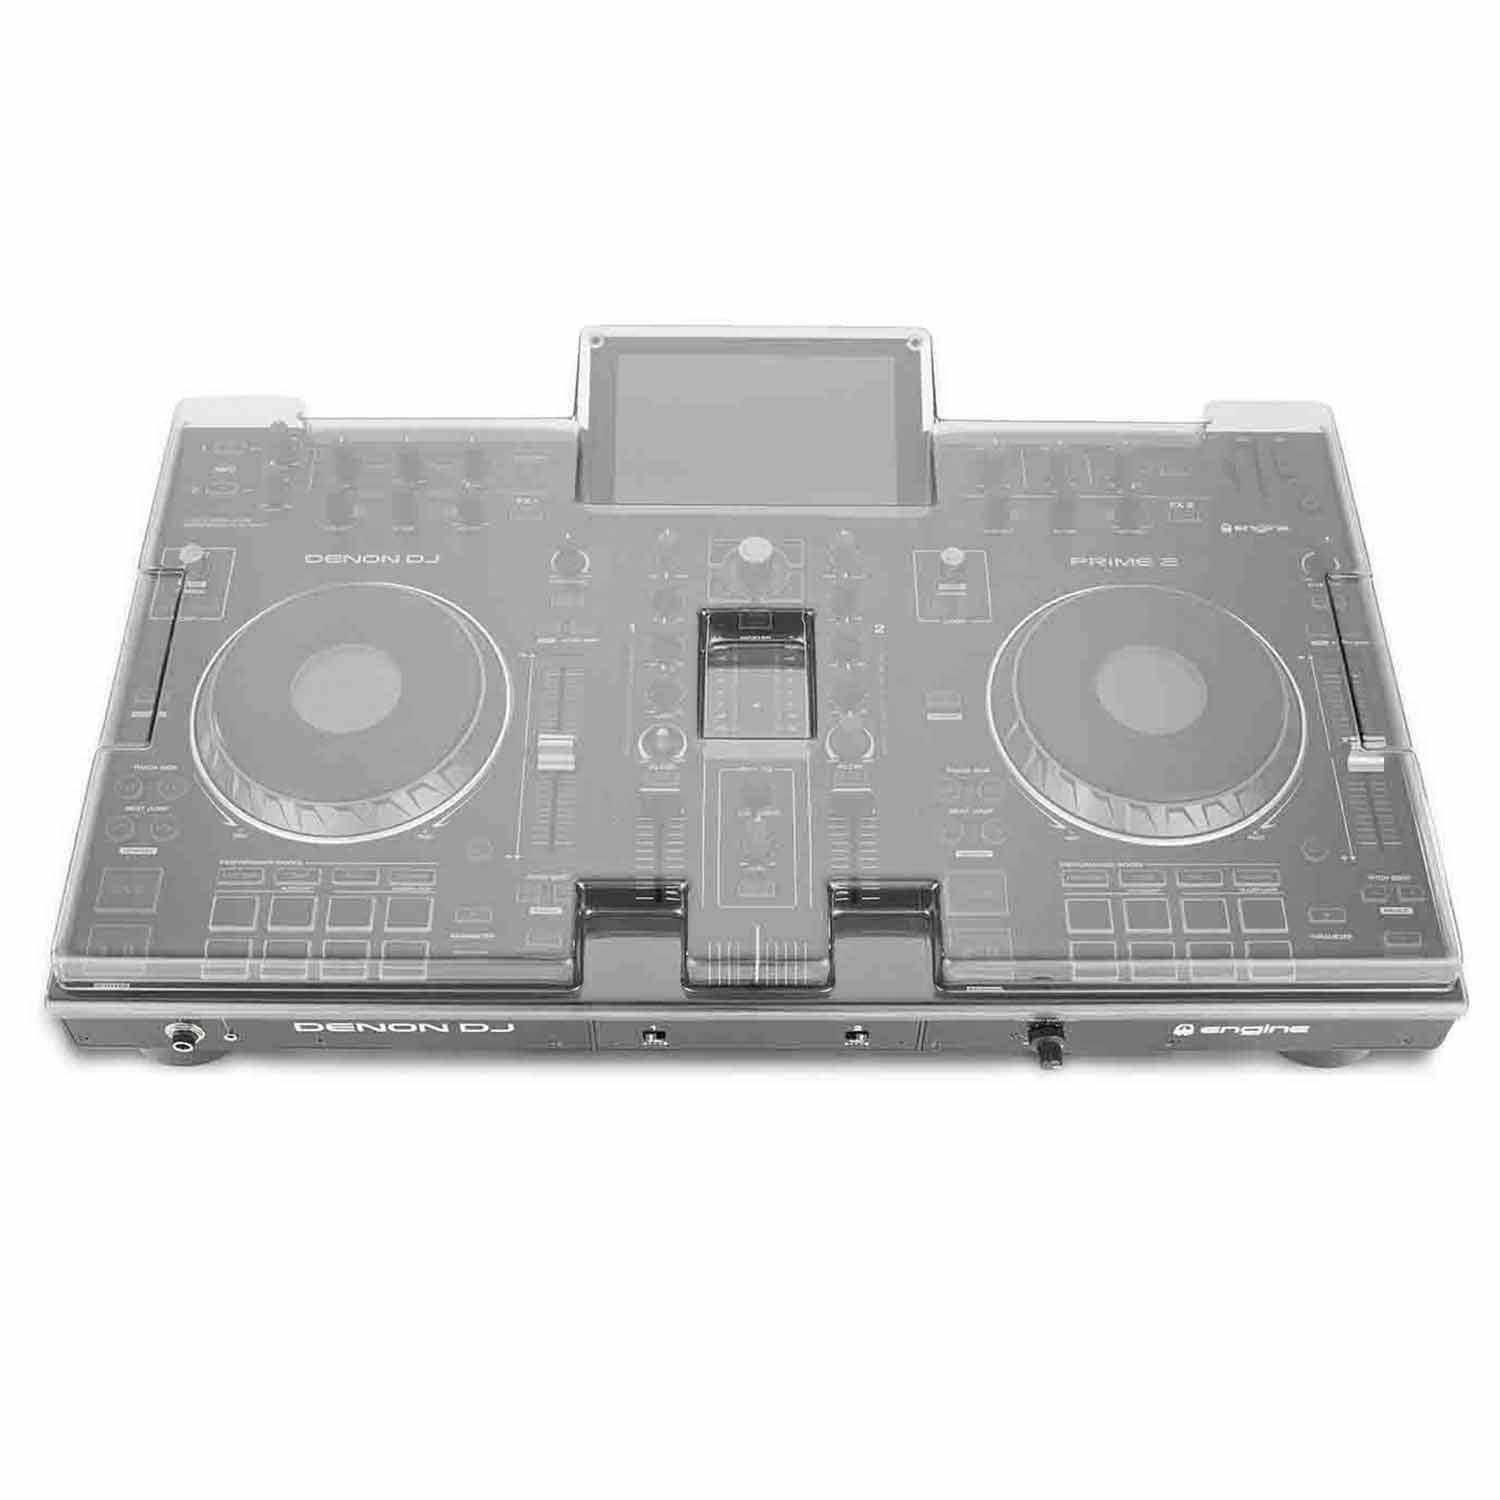 B-Stock: Decksaver DS-PC-PRIME2 Protection Cover for Denon DJ Prime 2 DJ Controller - Hollywood DJ